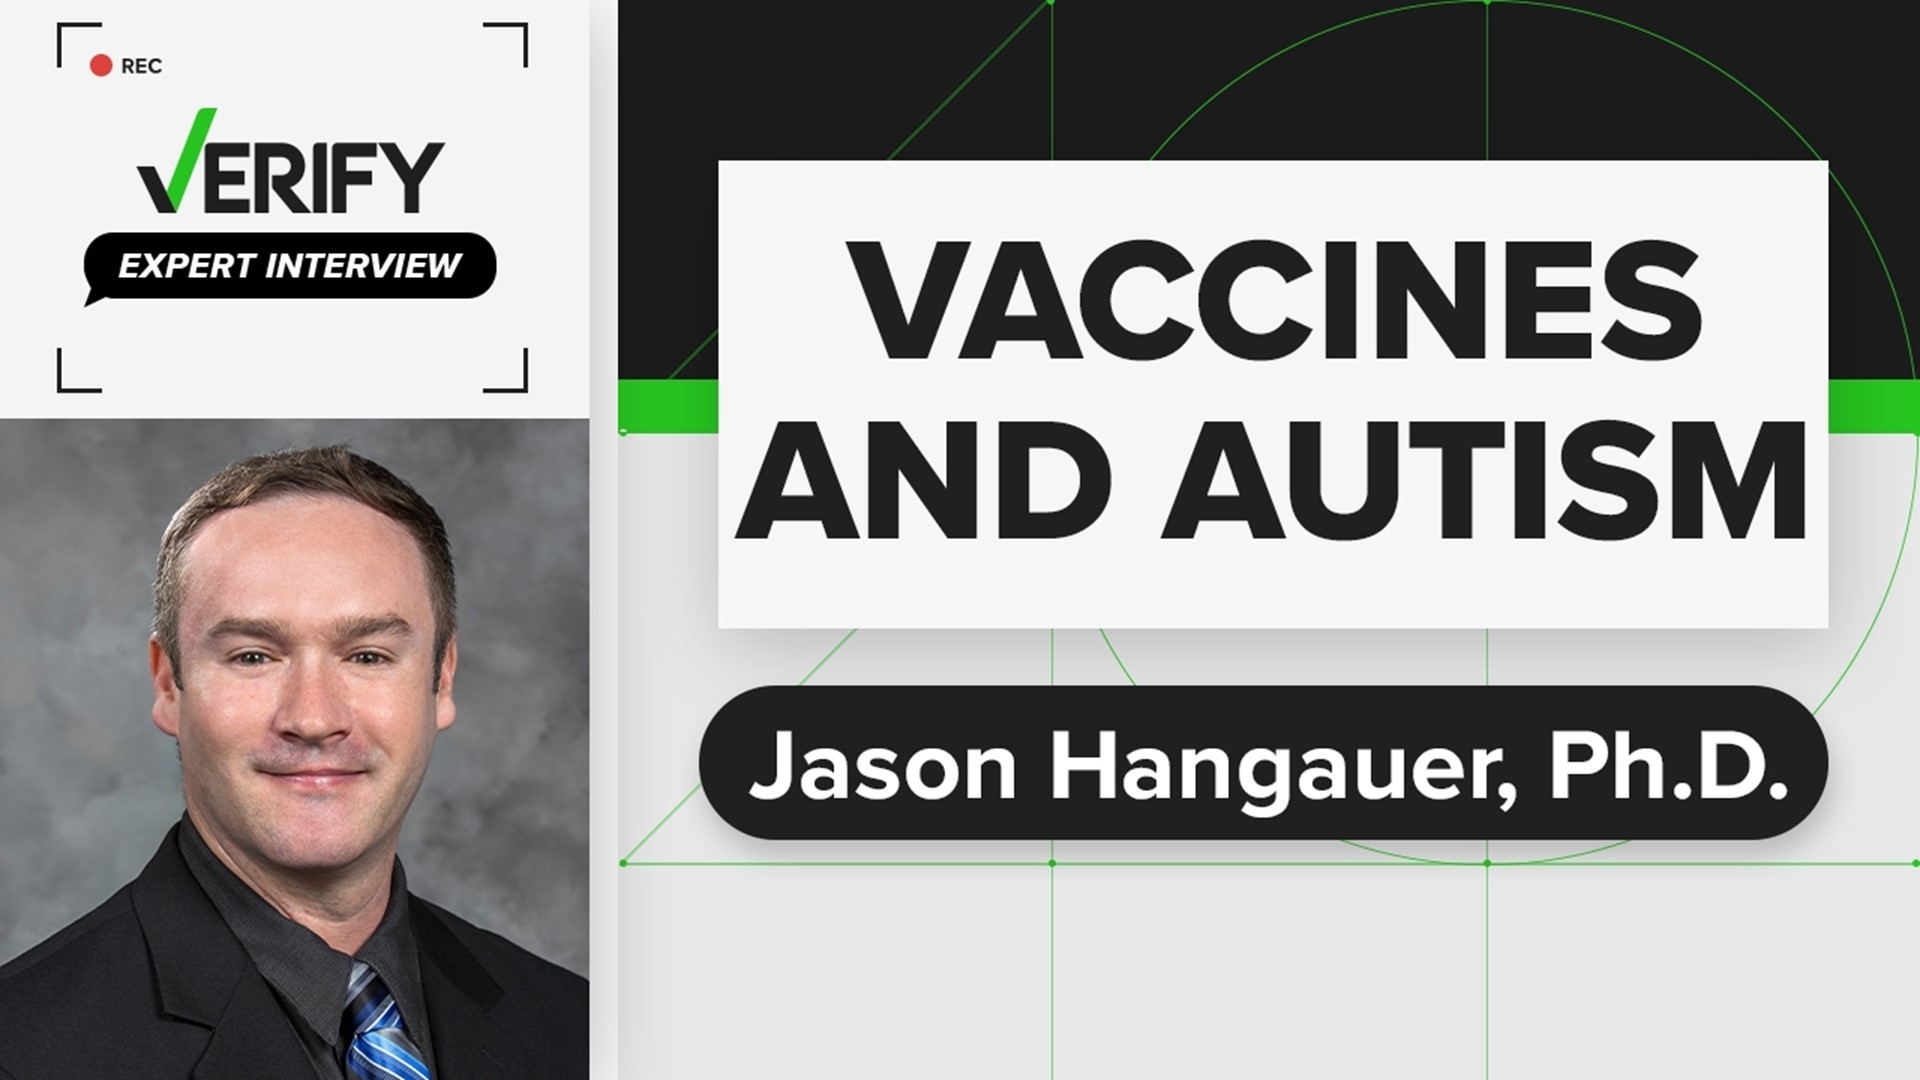 Jason Hangauer, Ph.D., Psychologist at Johns Hopkins All Children’s Hospital explains the origin of the false autism and vaccine link conspiracy.